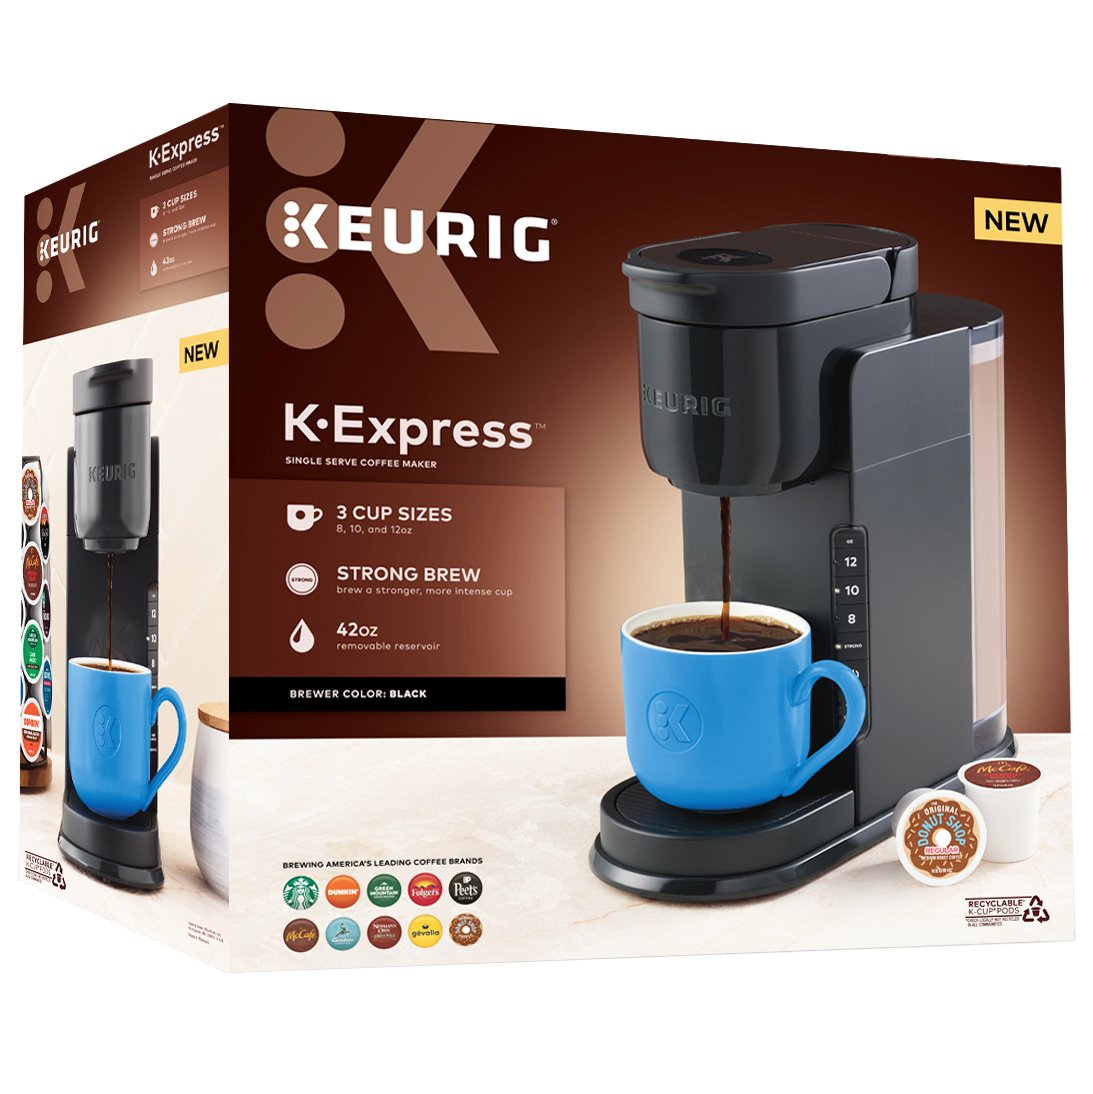 Black 8, 10, and 12 oz. Keurig K-Express Coffee Maker with bonus